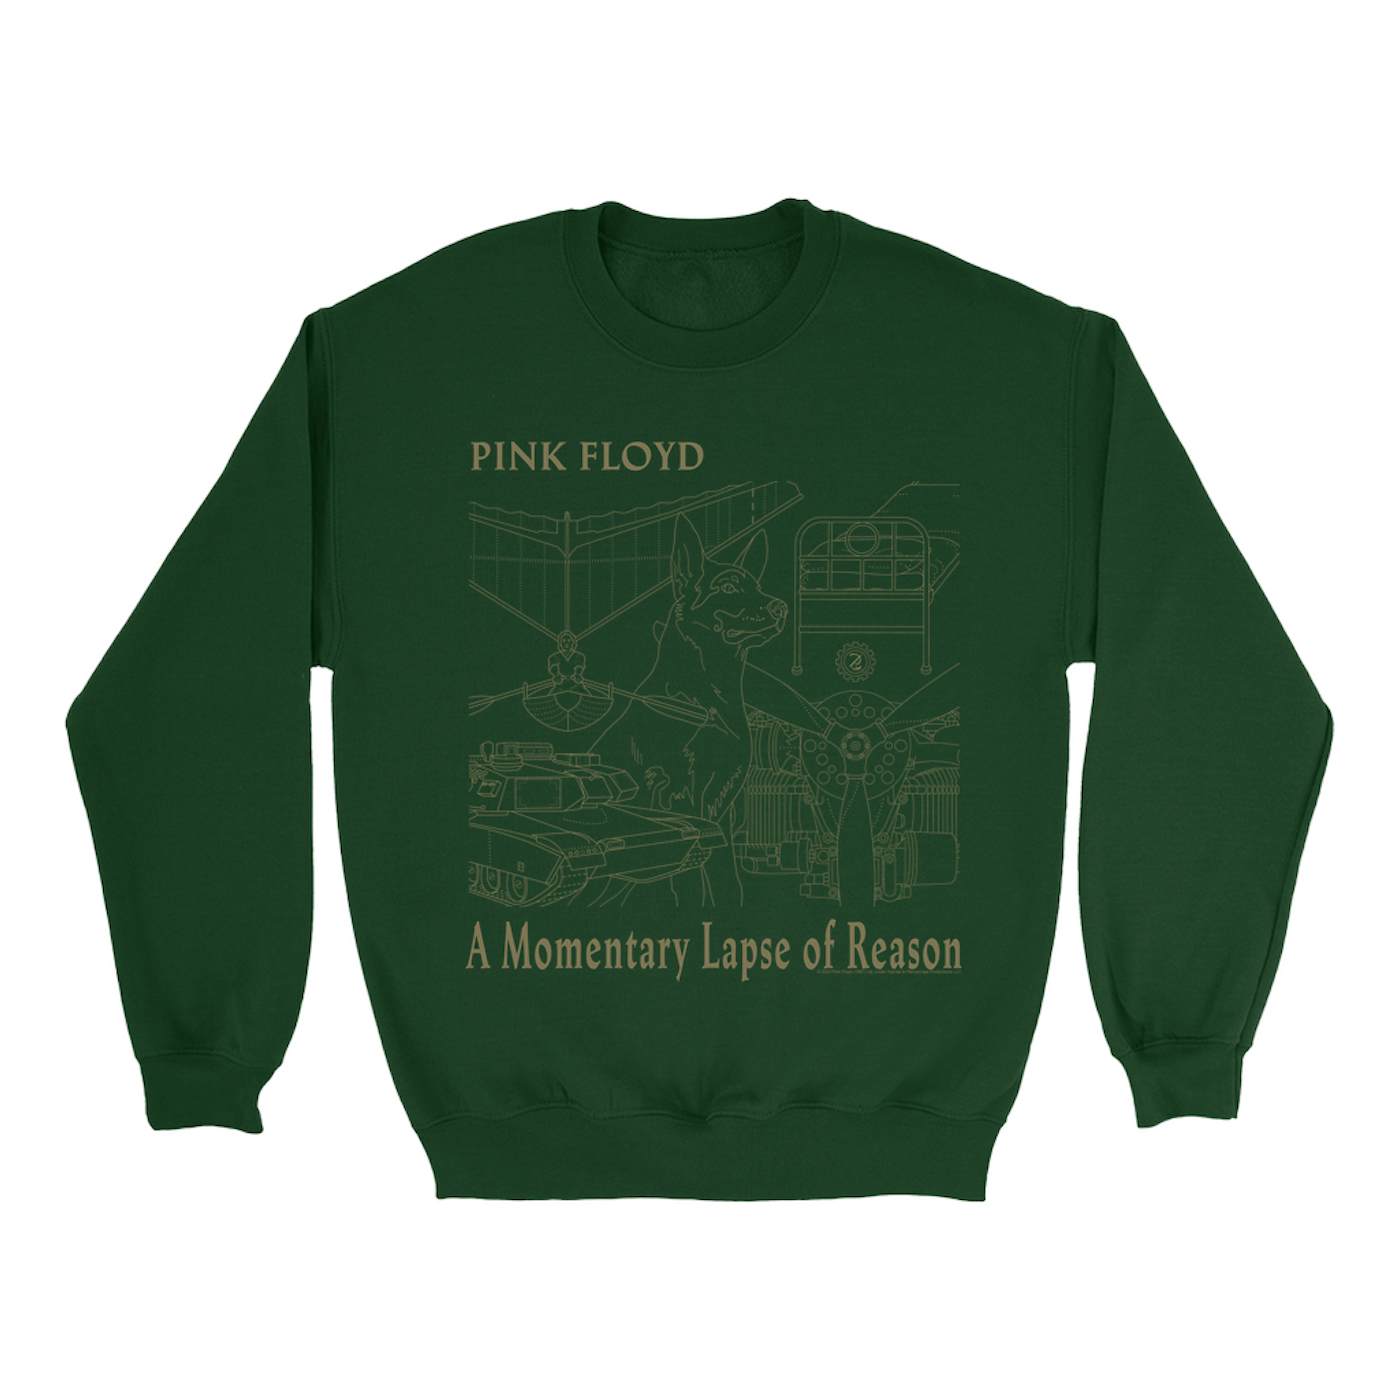 Pink Floyd Sweatshirt | A Momentary Lapse of Reason Schematic Pink Floyd Sweatshirt